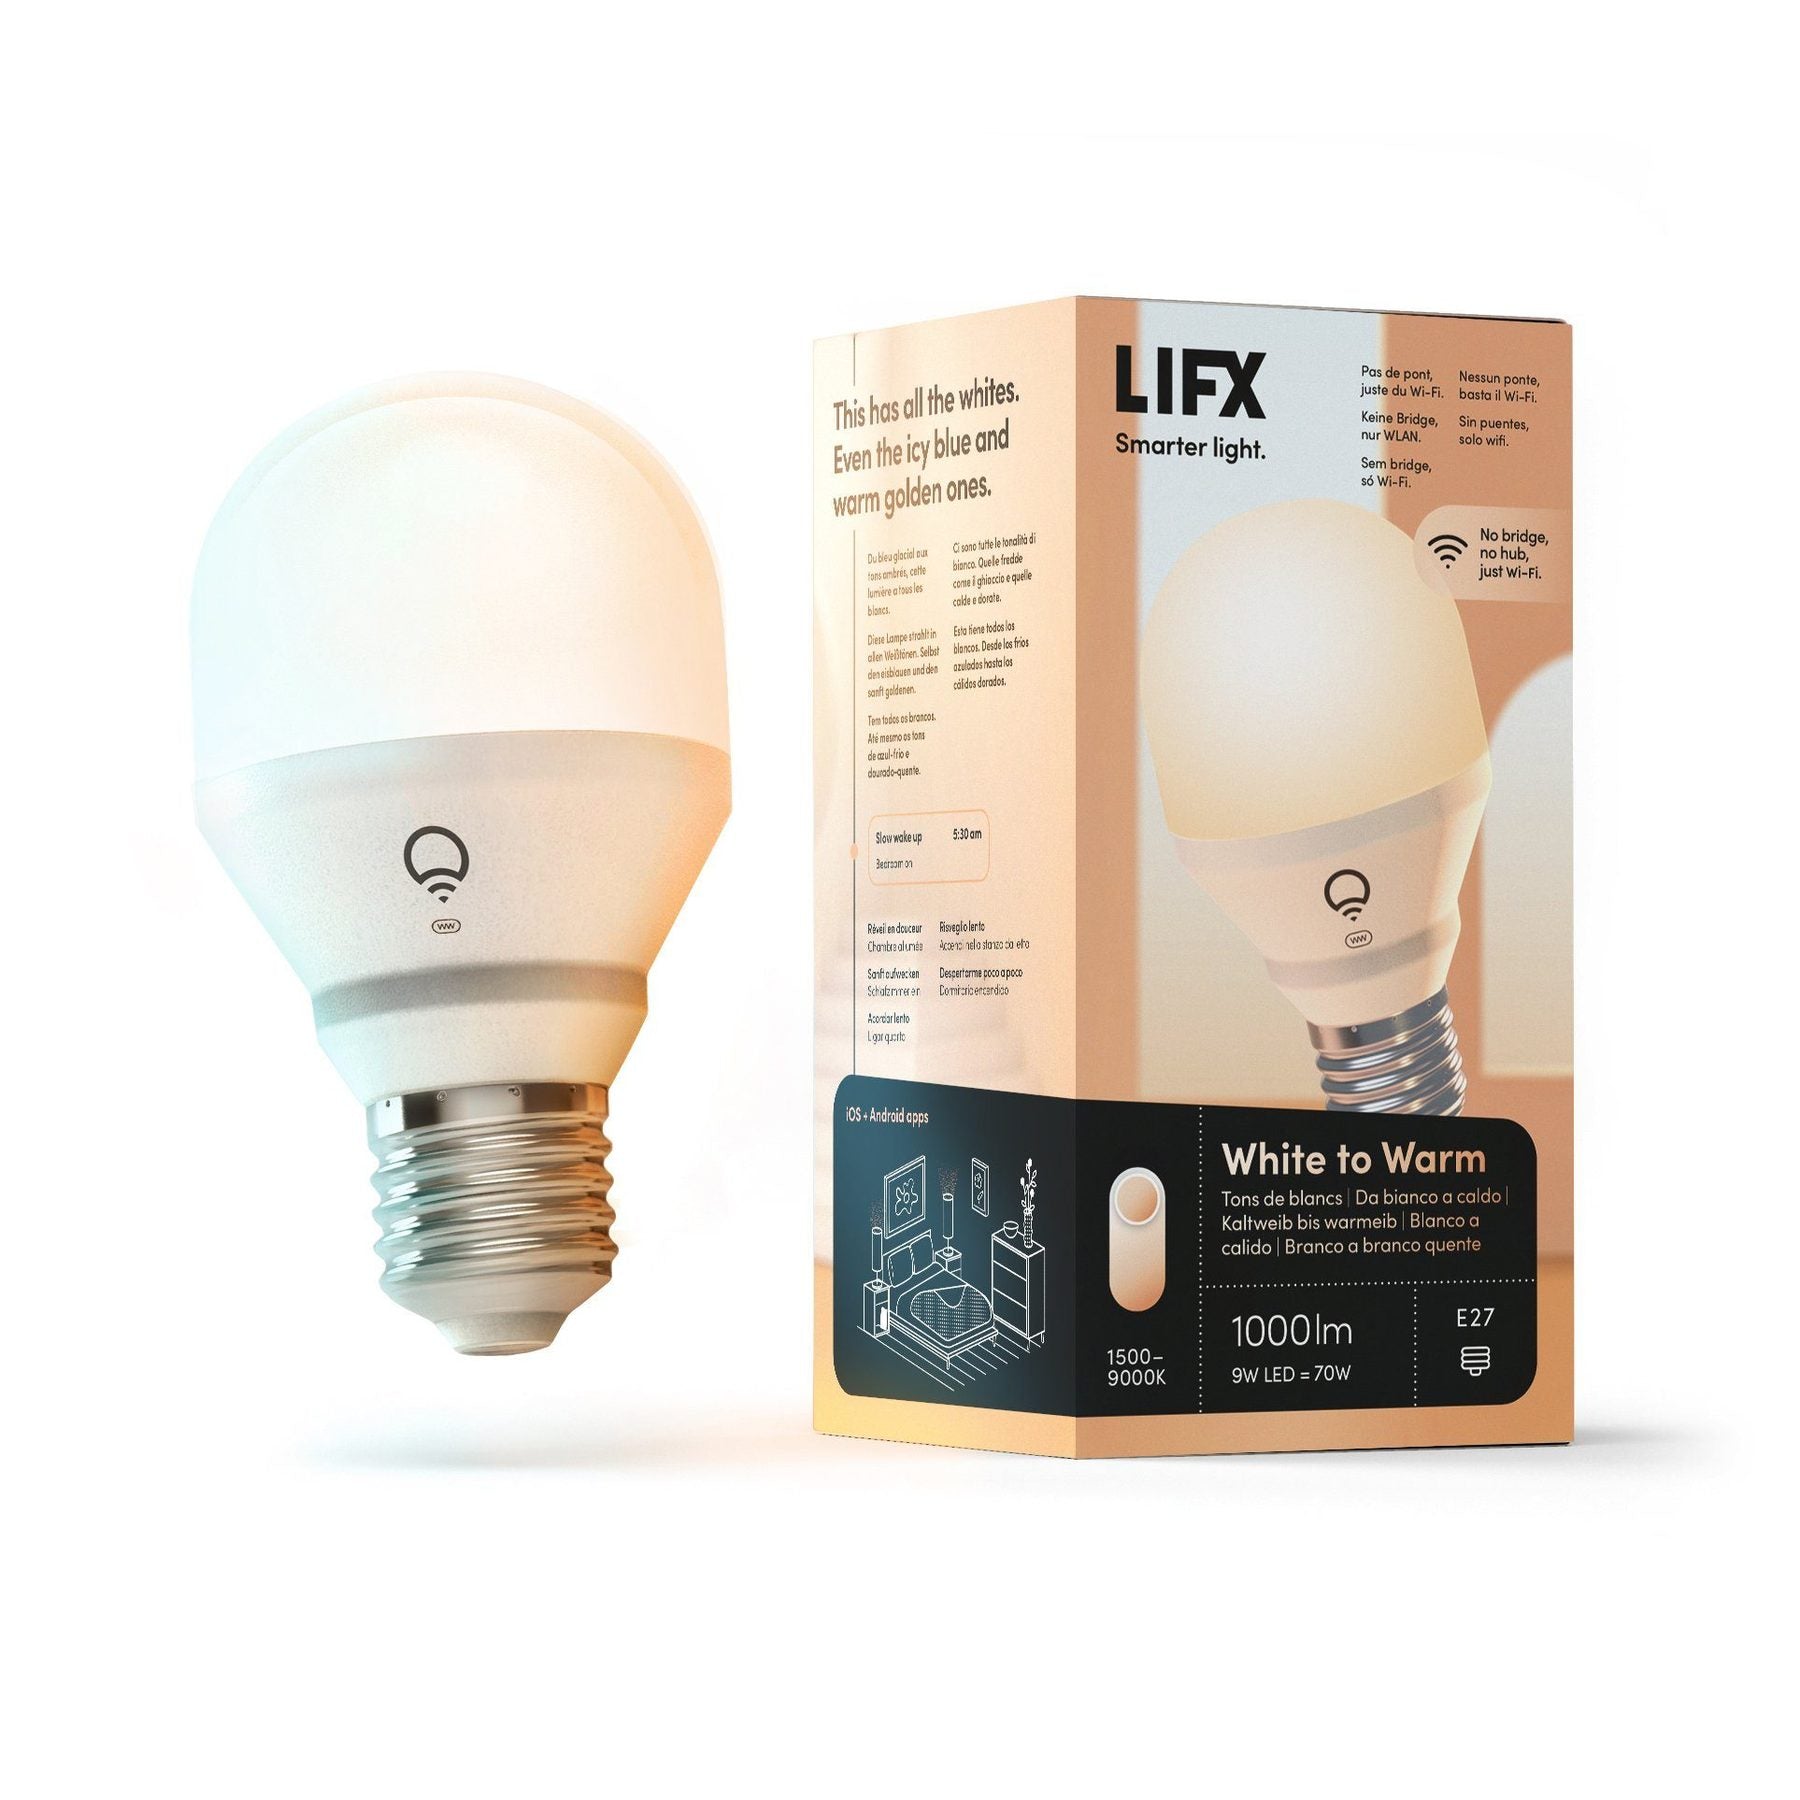 LIFX Mini light bulb next to its packaging